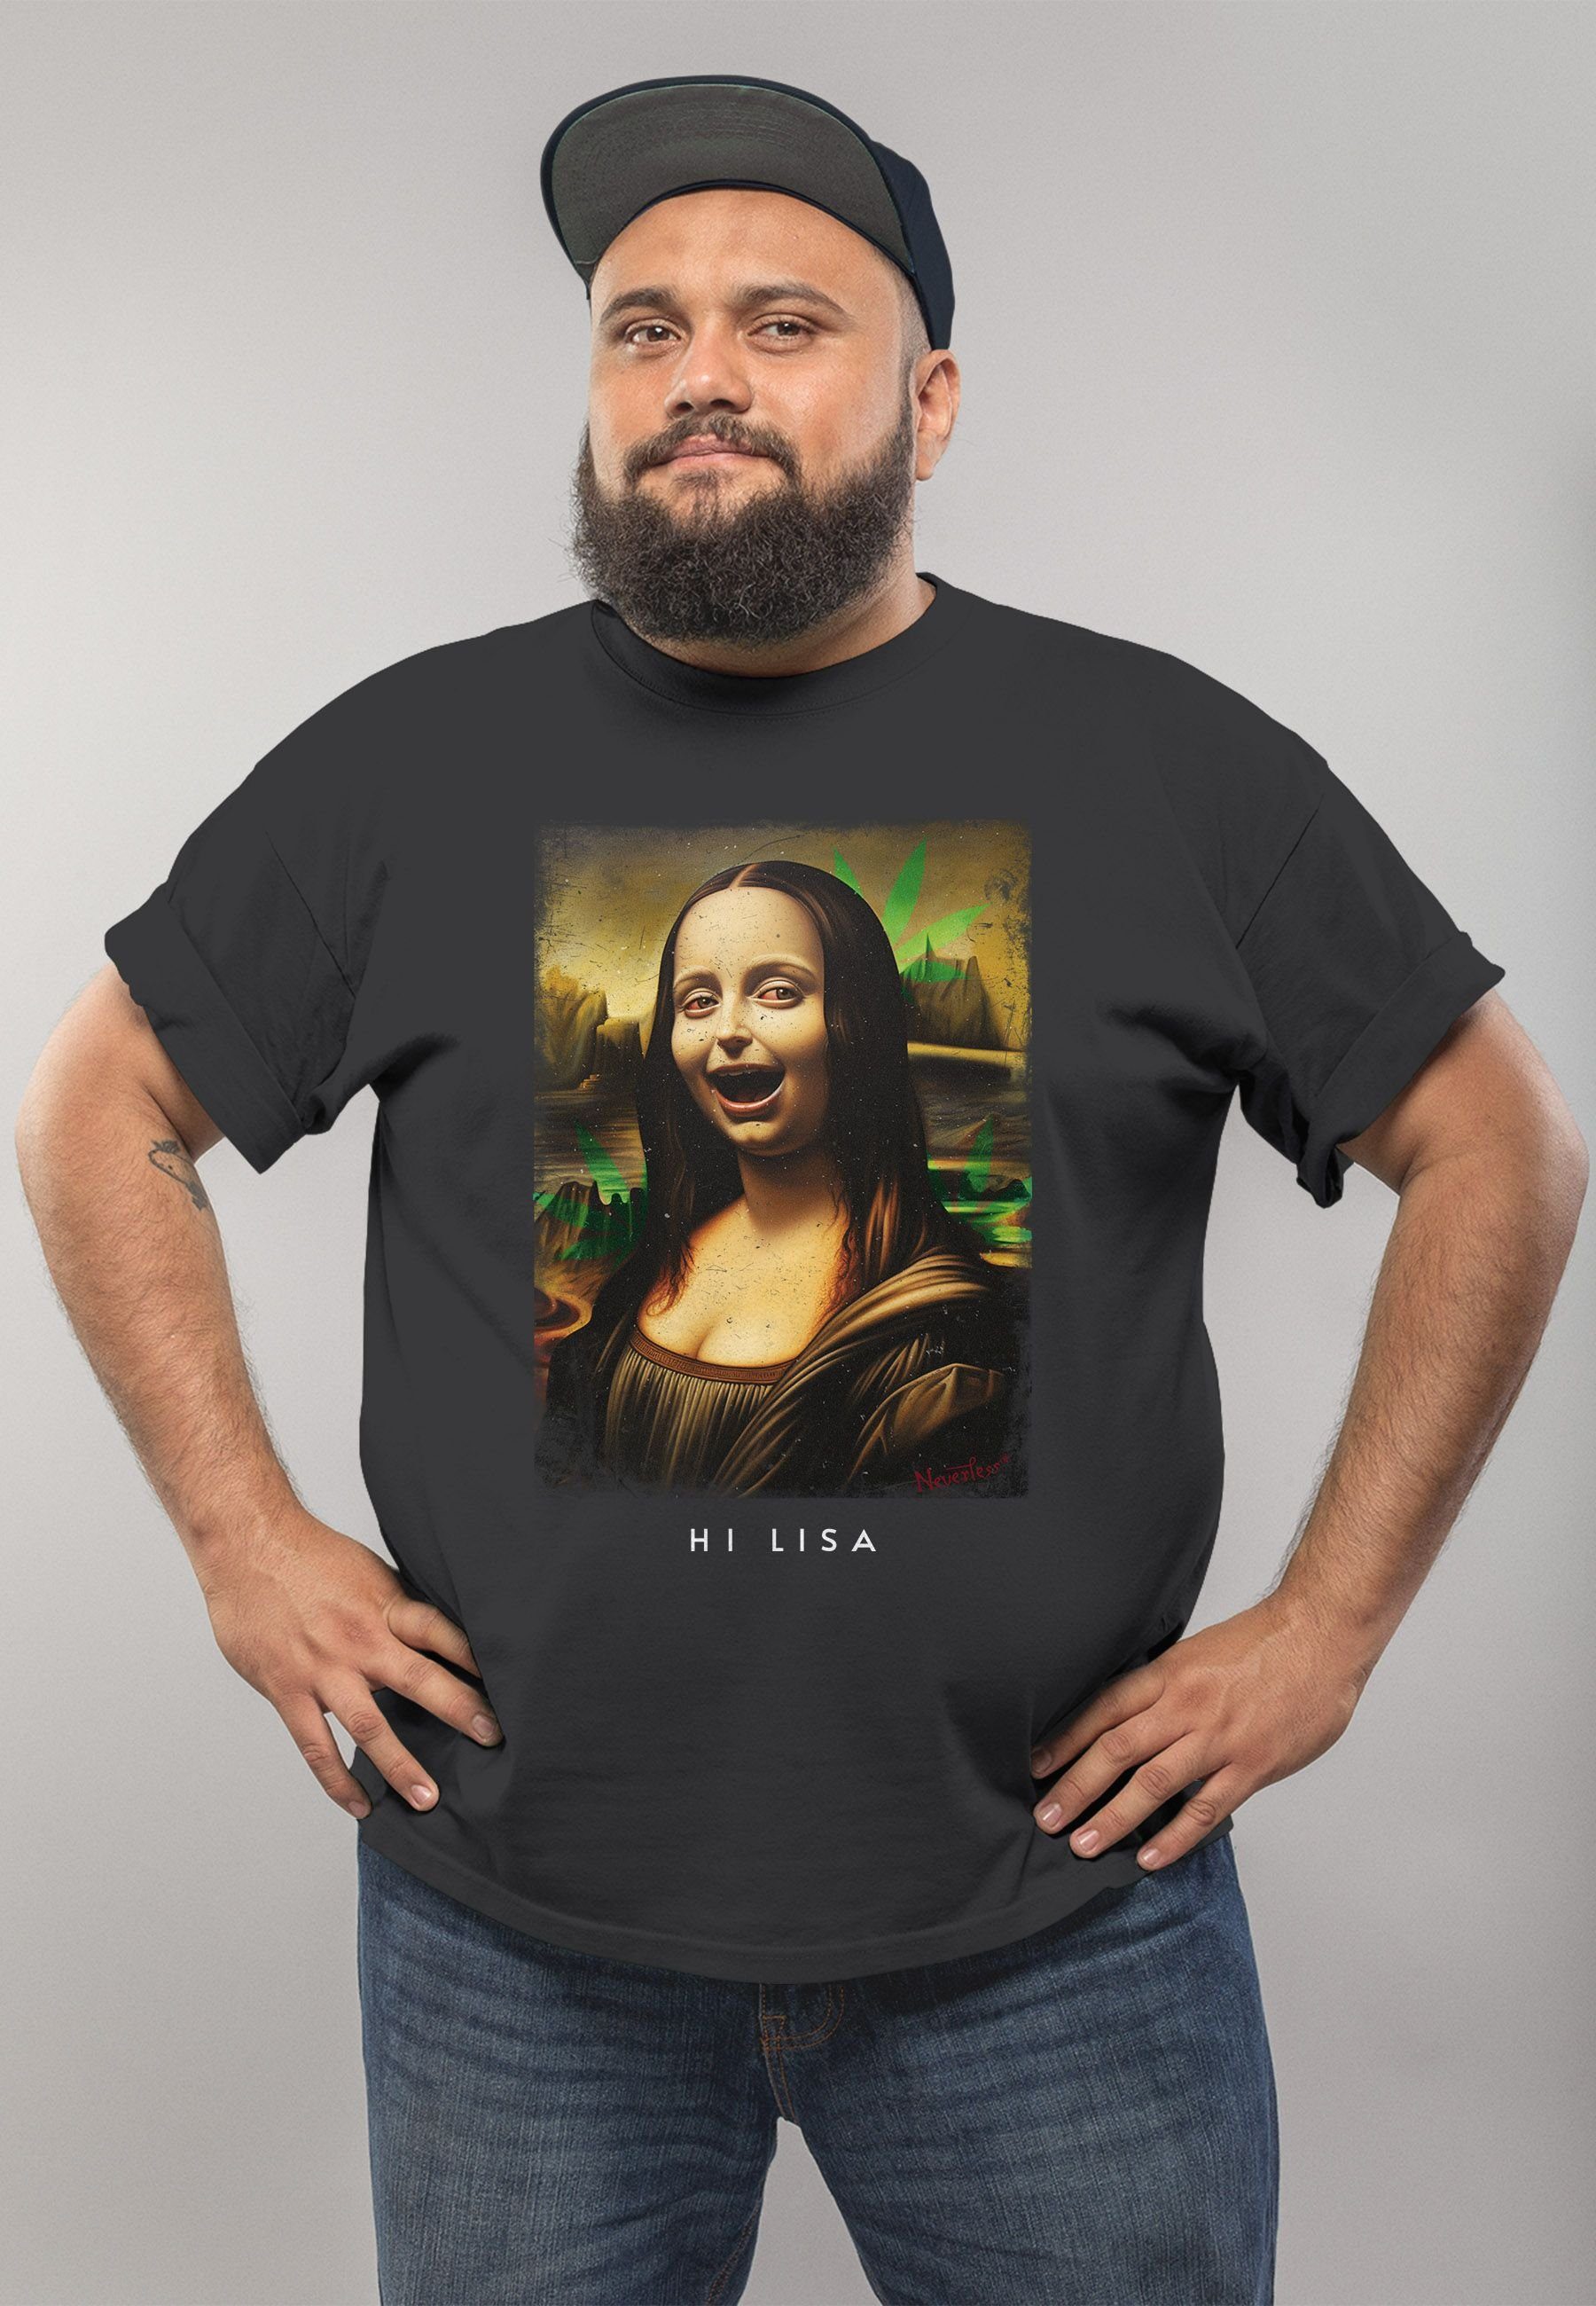 T-Shirt mit MoonWorks Meme Print Stona Aufdruck Lisa Mona Parodie Print Kapuzen-Pullover anthrazit Lisa Herren Print-Shirt